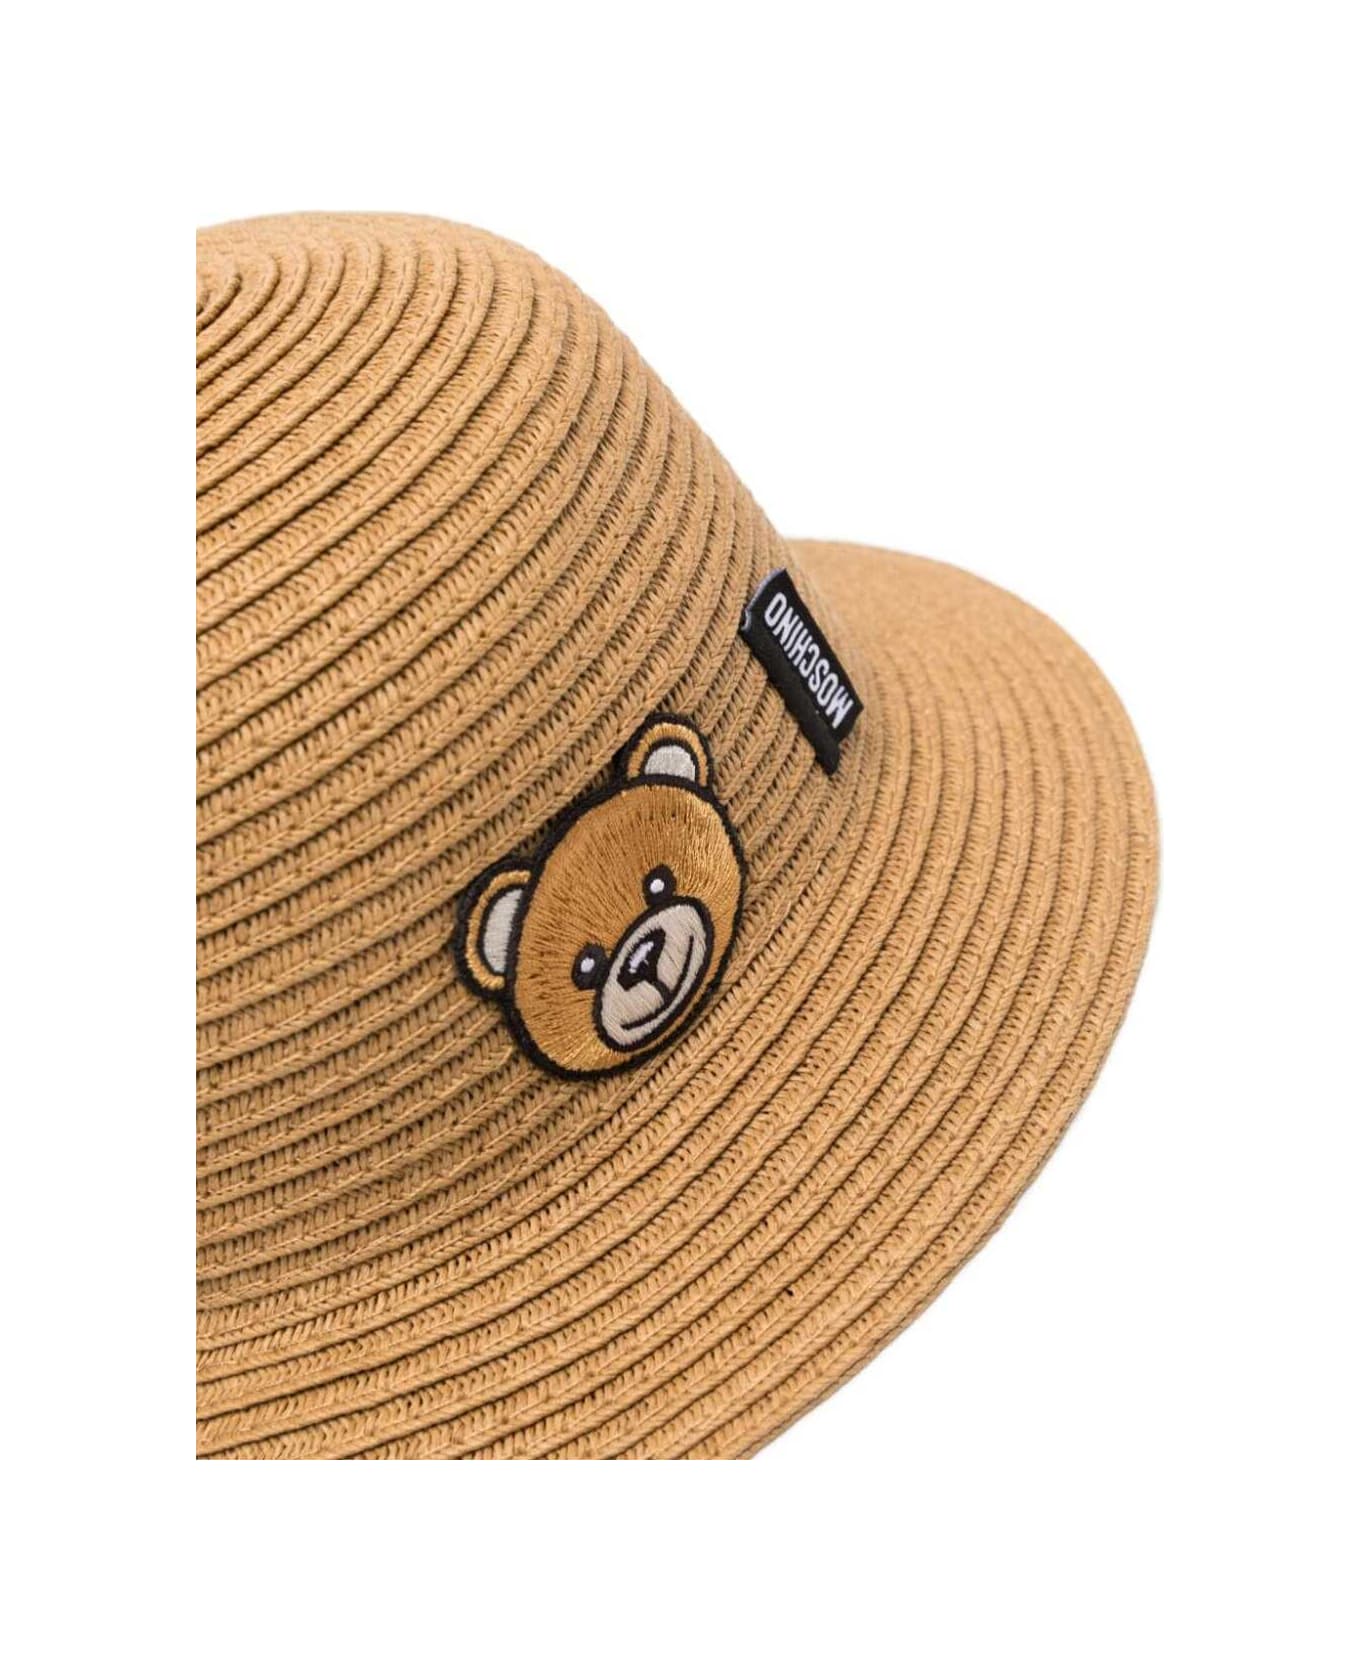 Moschino Beige Bucket Hat With Teddy Bear In Rafia Baby - Brown